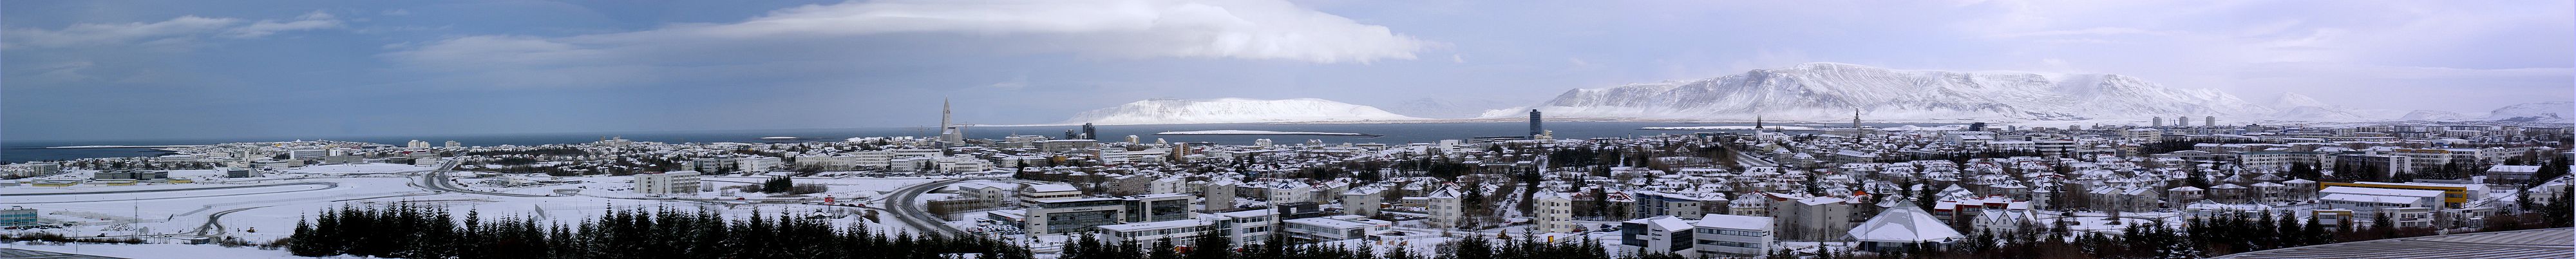 Reykjavík: Història, Geografia, Demografia